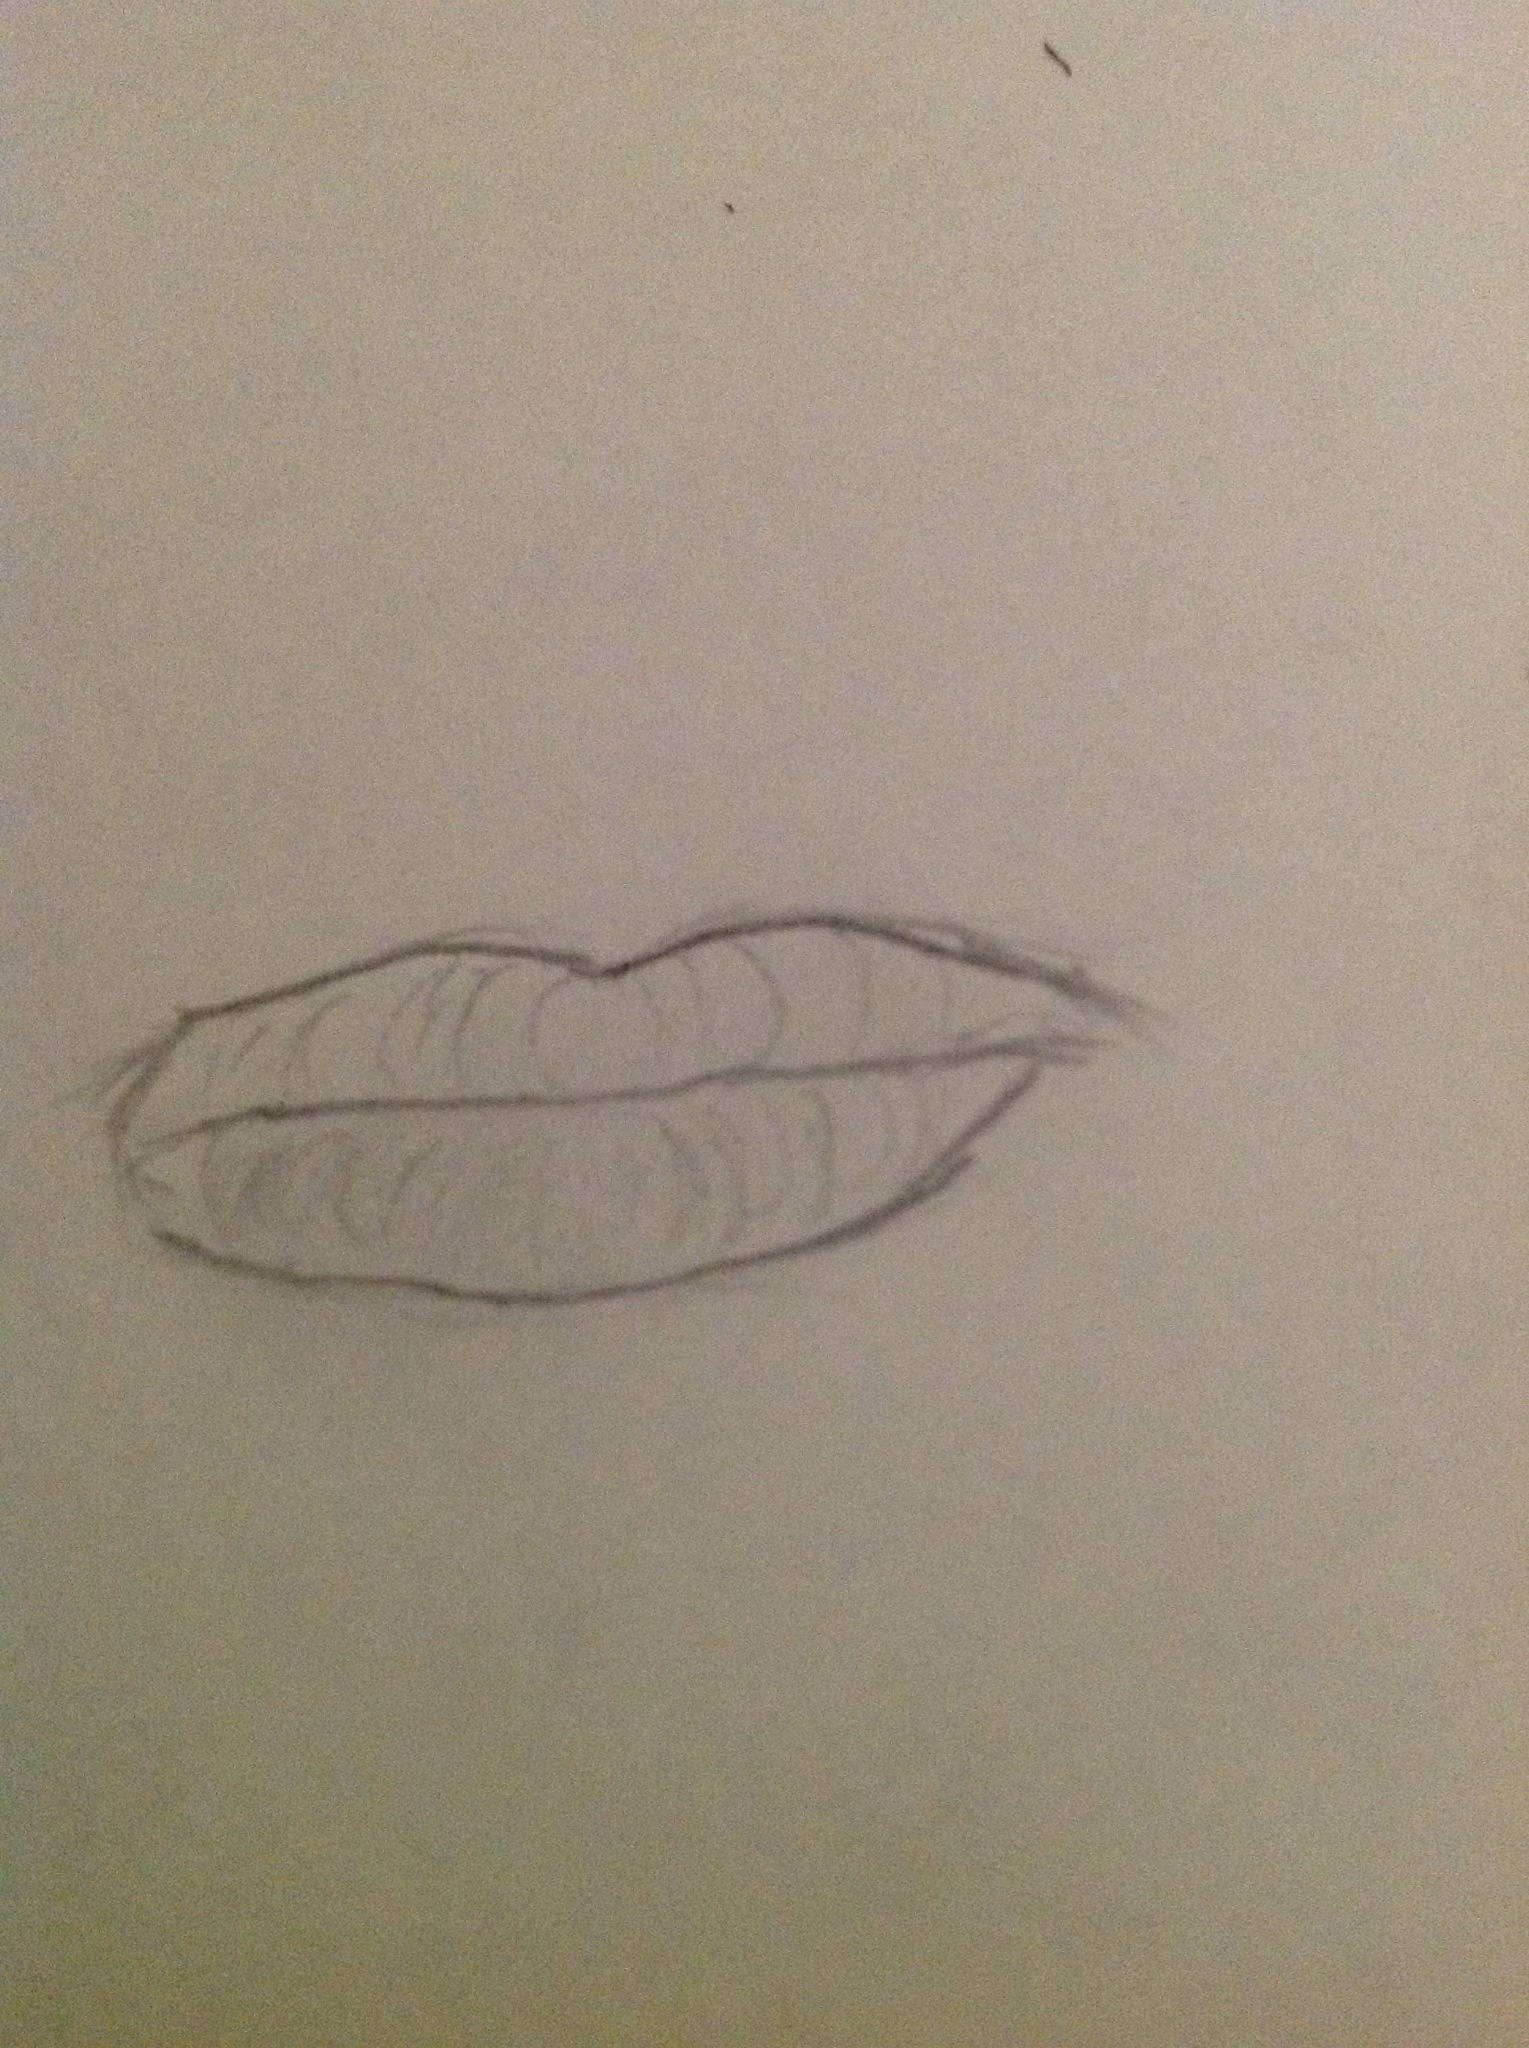 Ladies Beautiful Lips Drawing Astraea Keva - Illustrations ART street